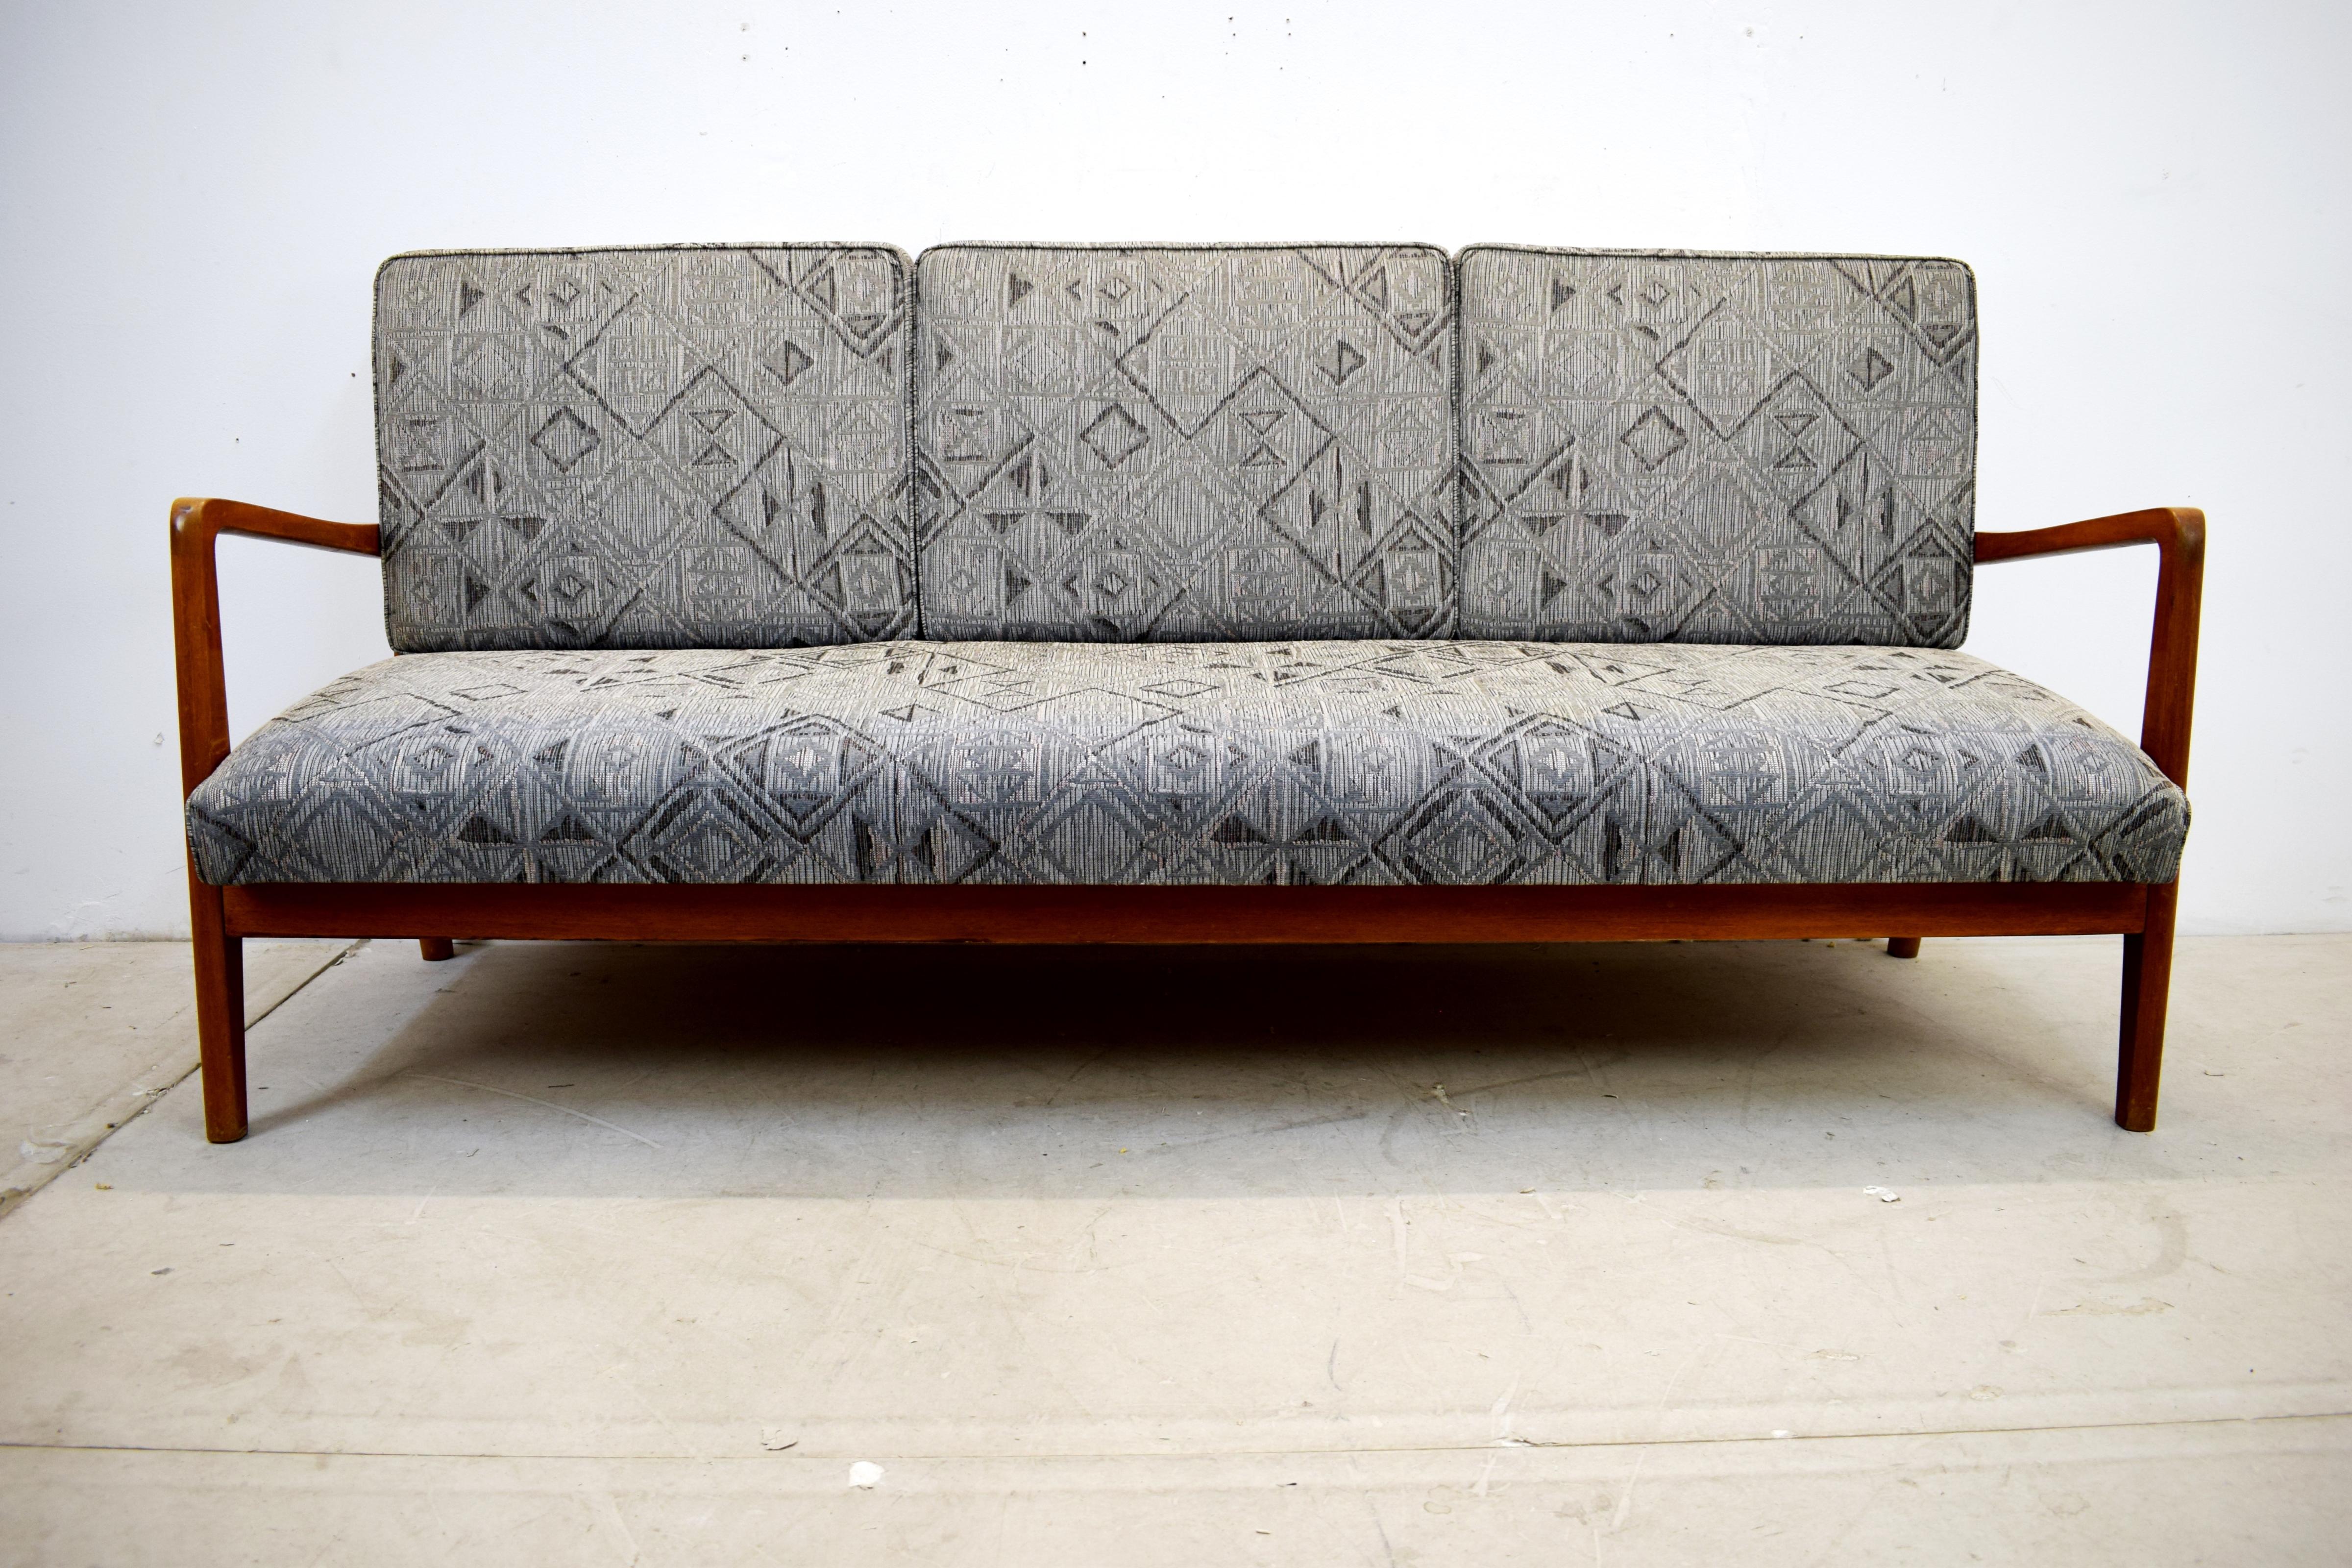 Italian sofa, 1960s.
Dimensions: H= 90; W=190; D= 75 cm; H S= 40 cm.